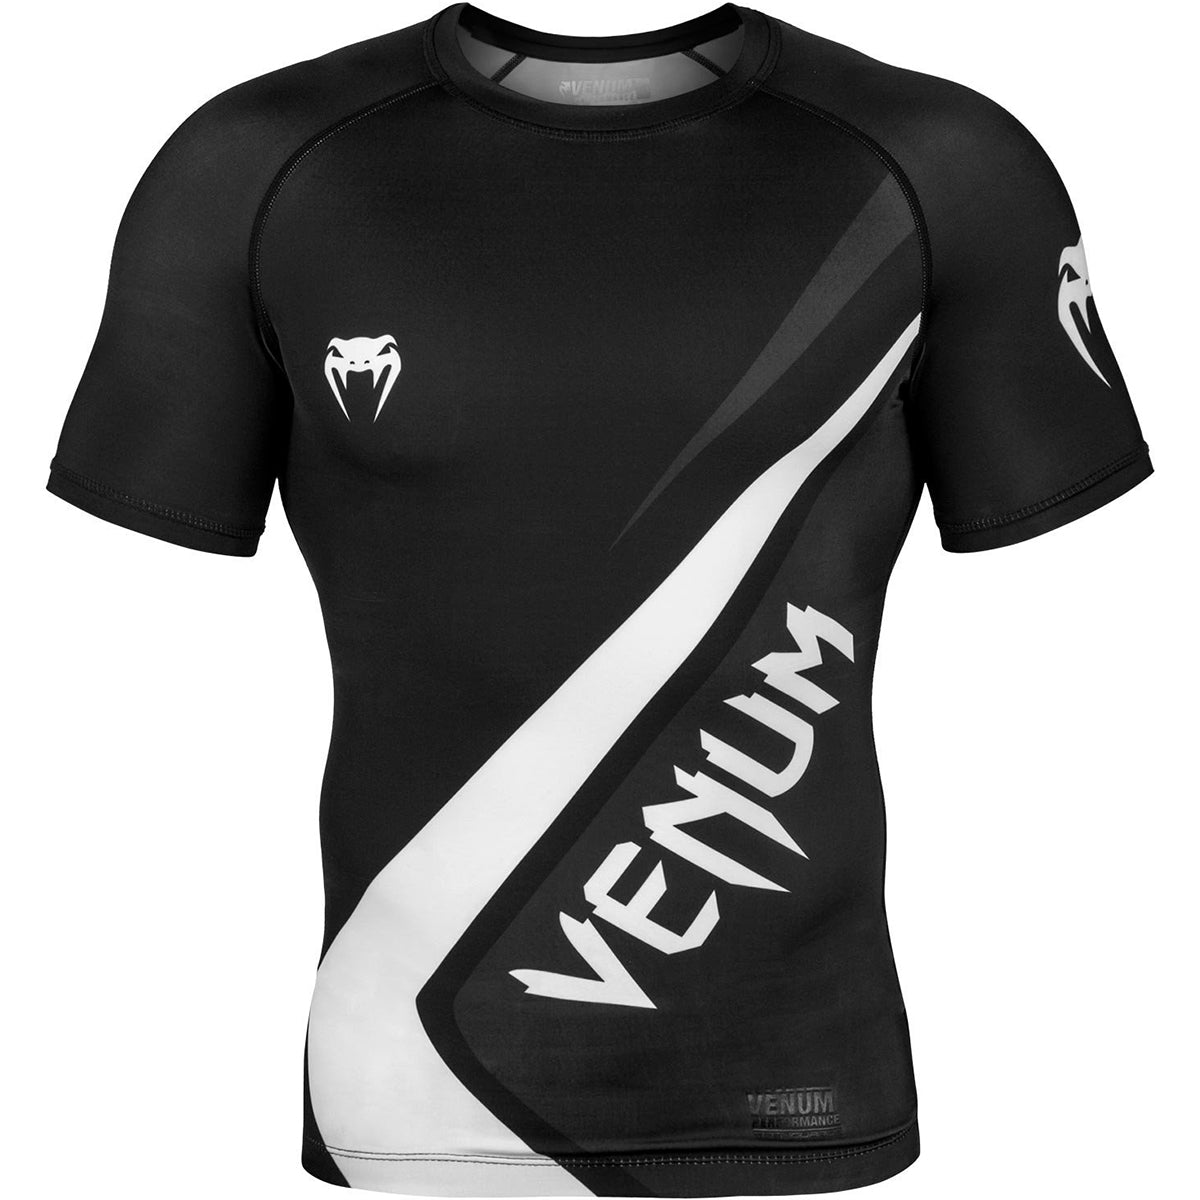 Venum Contender 4.0 Short Sleeve MMA Compression Rashguard - Black/Gray/White Venum